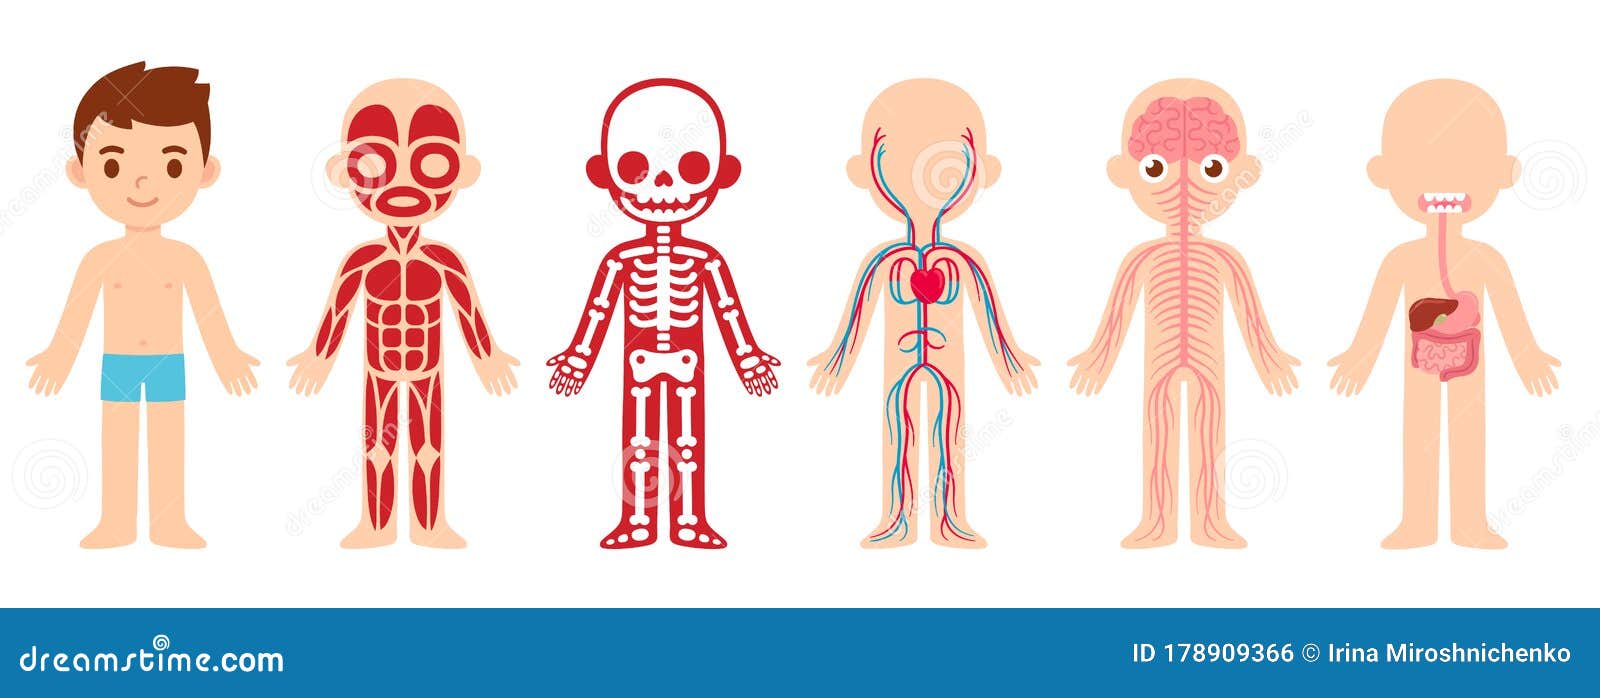 Body Anatomy For Kids Vector Illustration | CartoonDealer.com #61441358